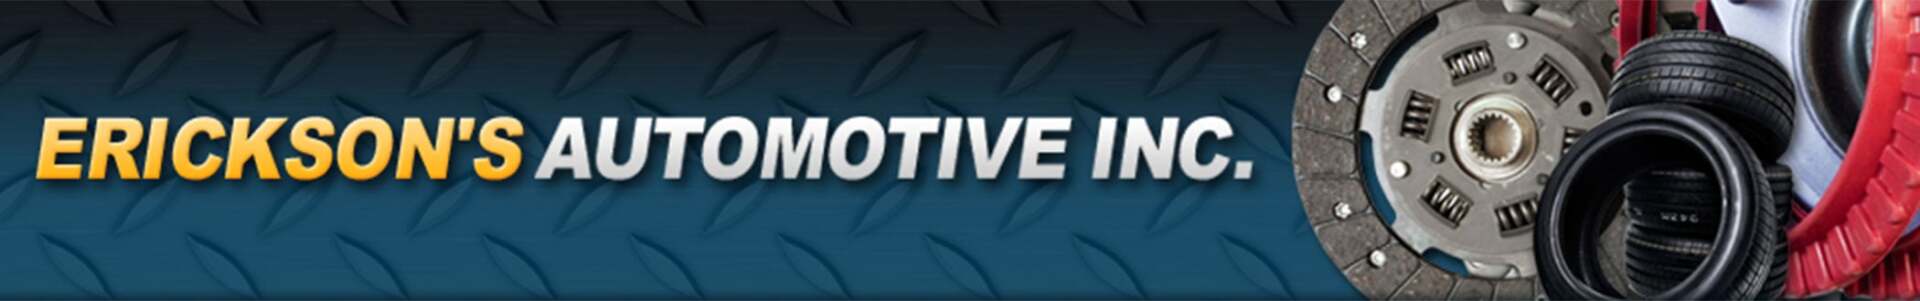 Erickson's Automotive Inc logo